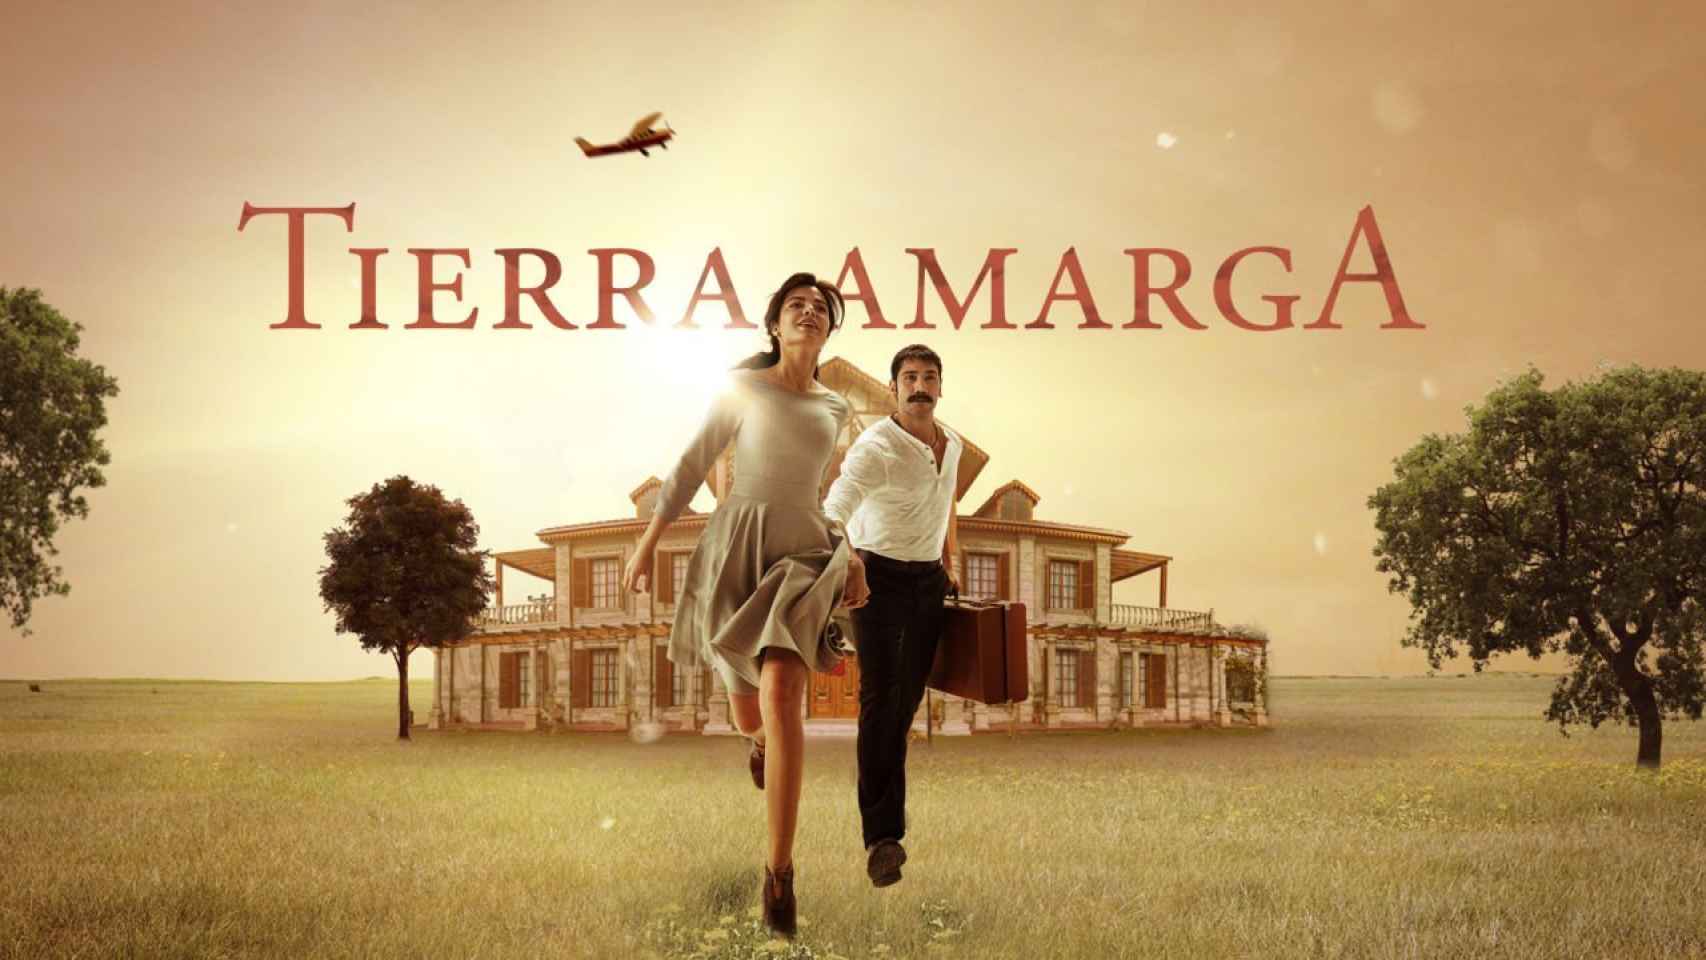 Cartel de la telenovela turca 'Tierra amarga', que  en España emite Antena 3.